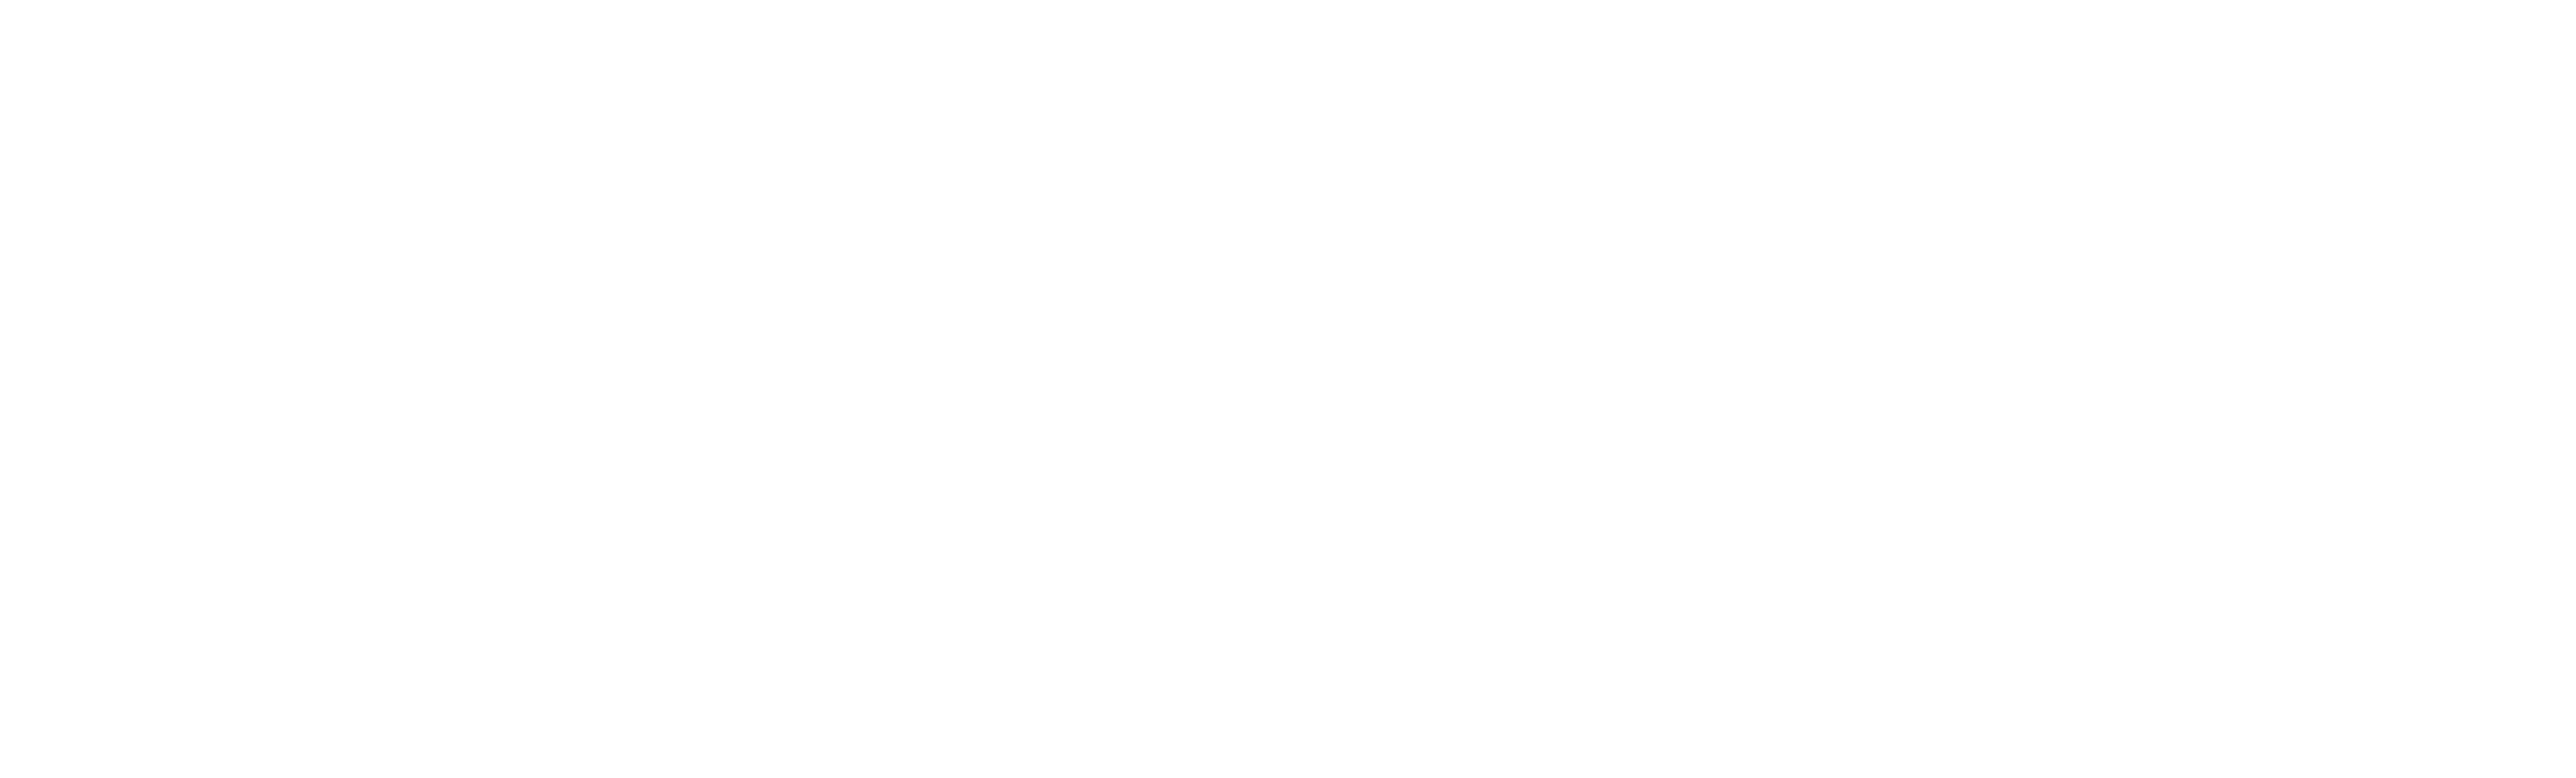 Spotify Logo transparent PNG - StickPNG